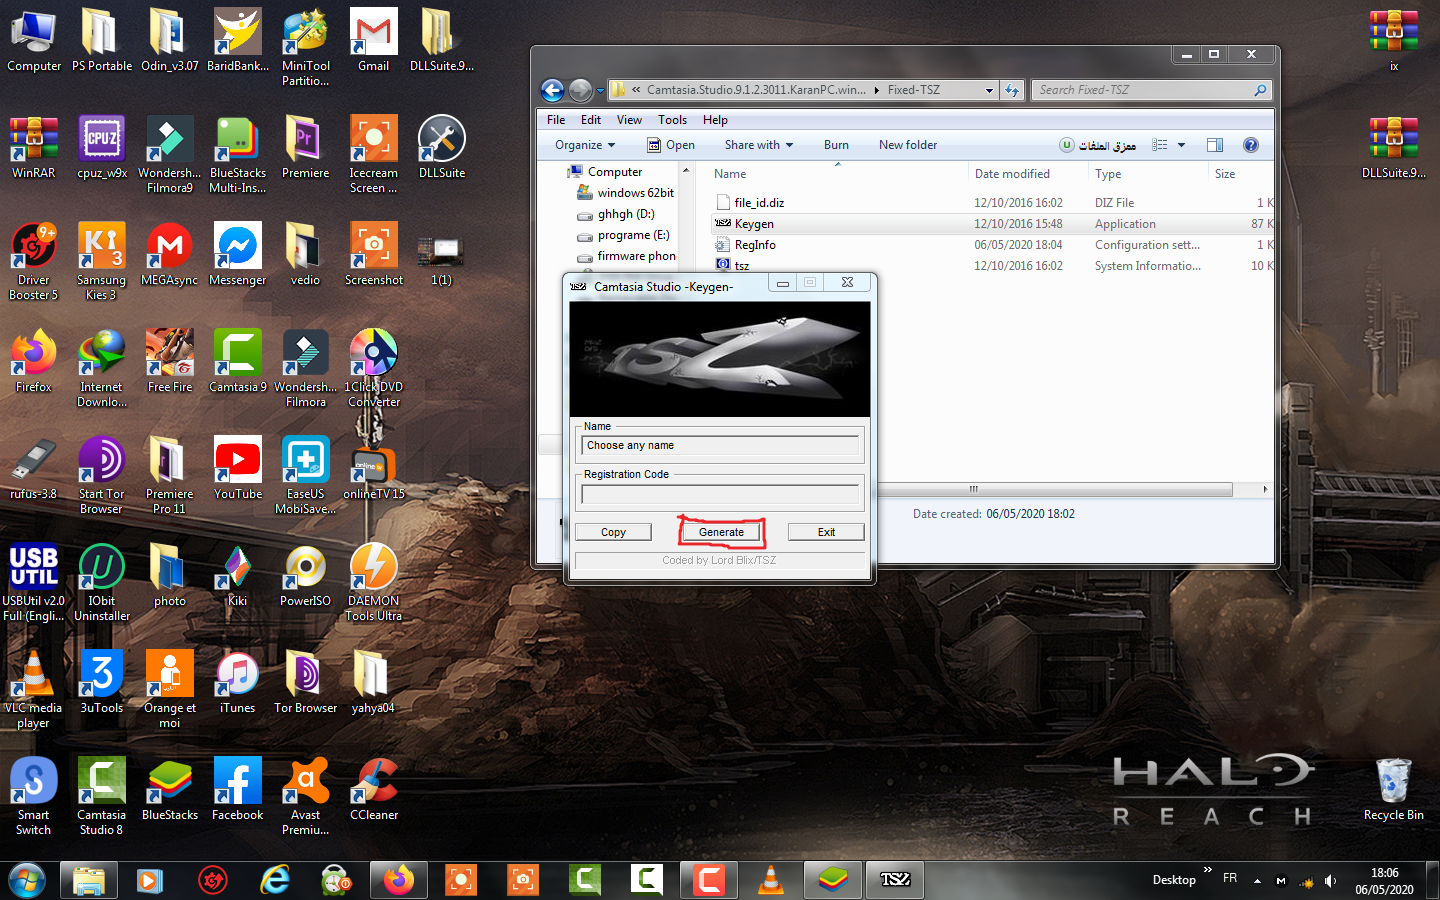 camtasia studio 9 download windows 7 32bit